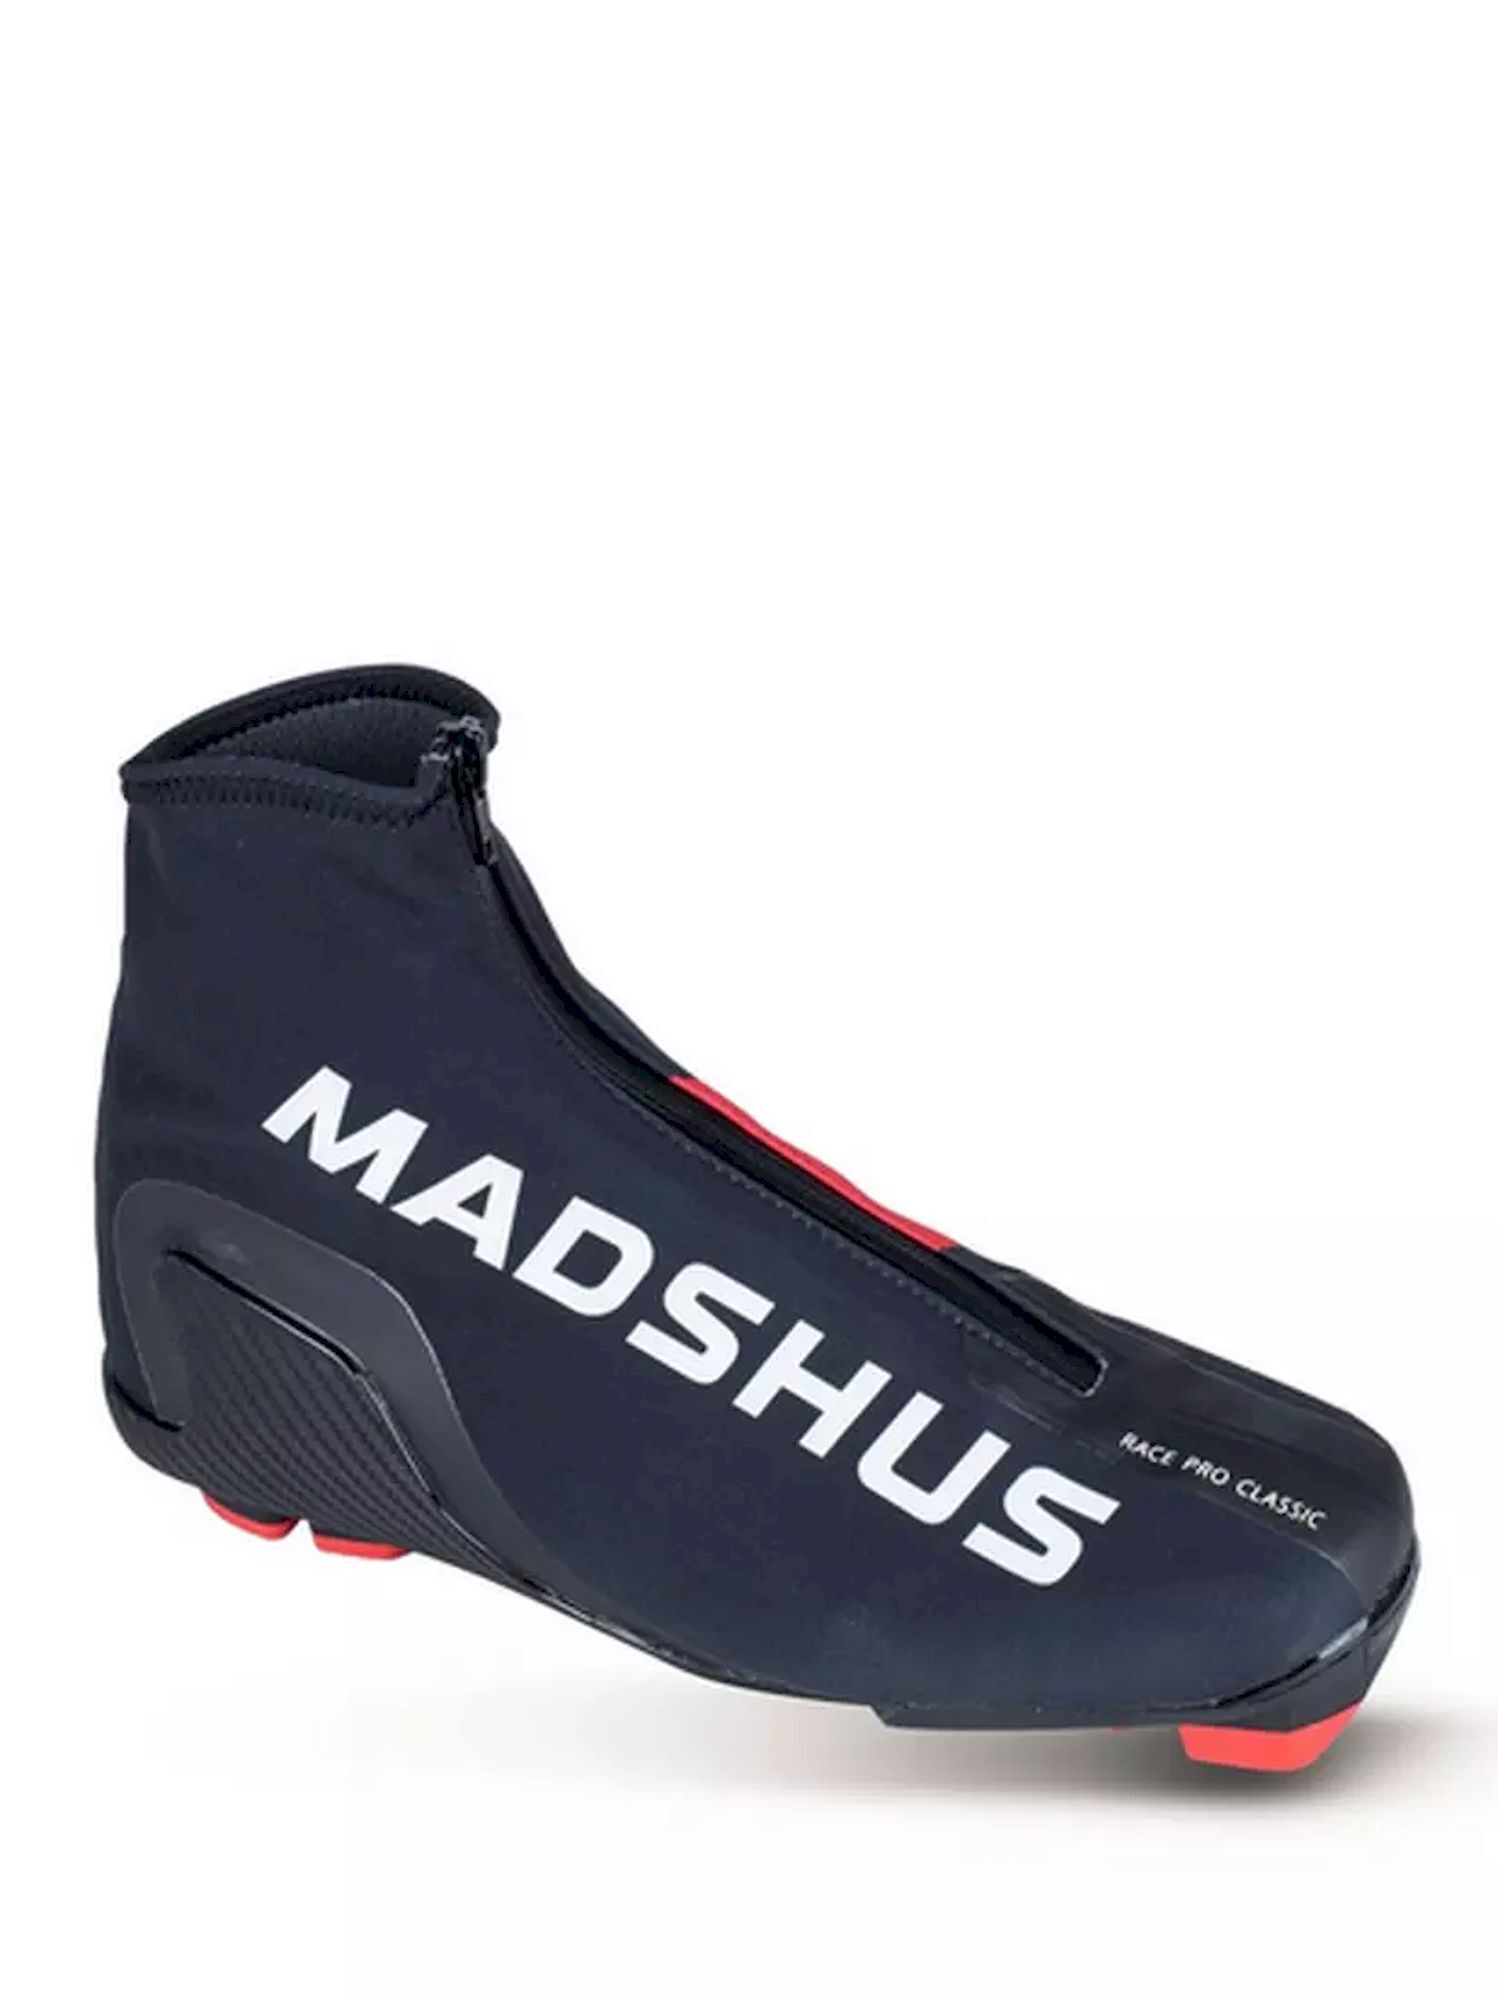 Madshus Race Pro Classic - Langlaufschoenen | Hardloop